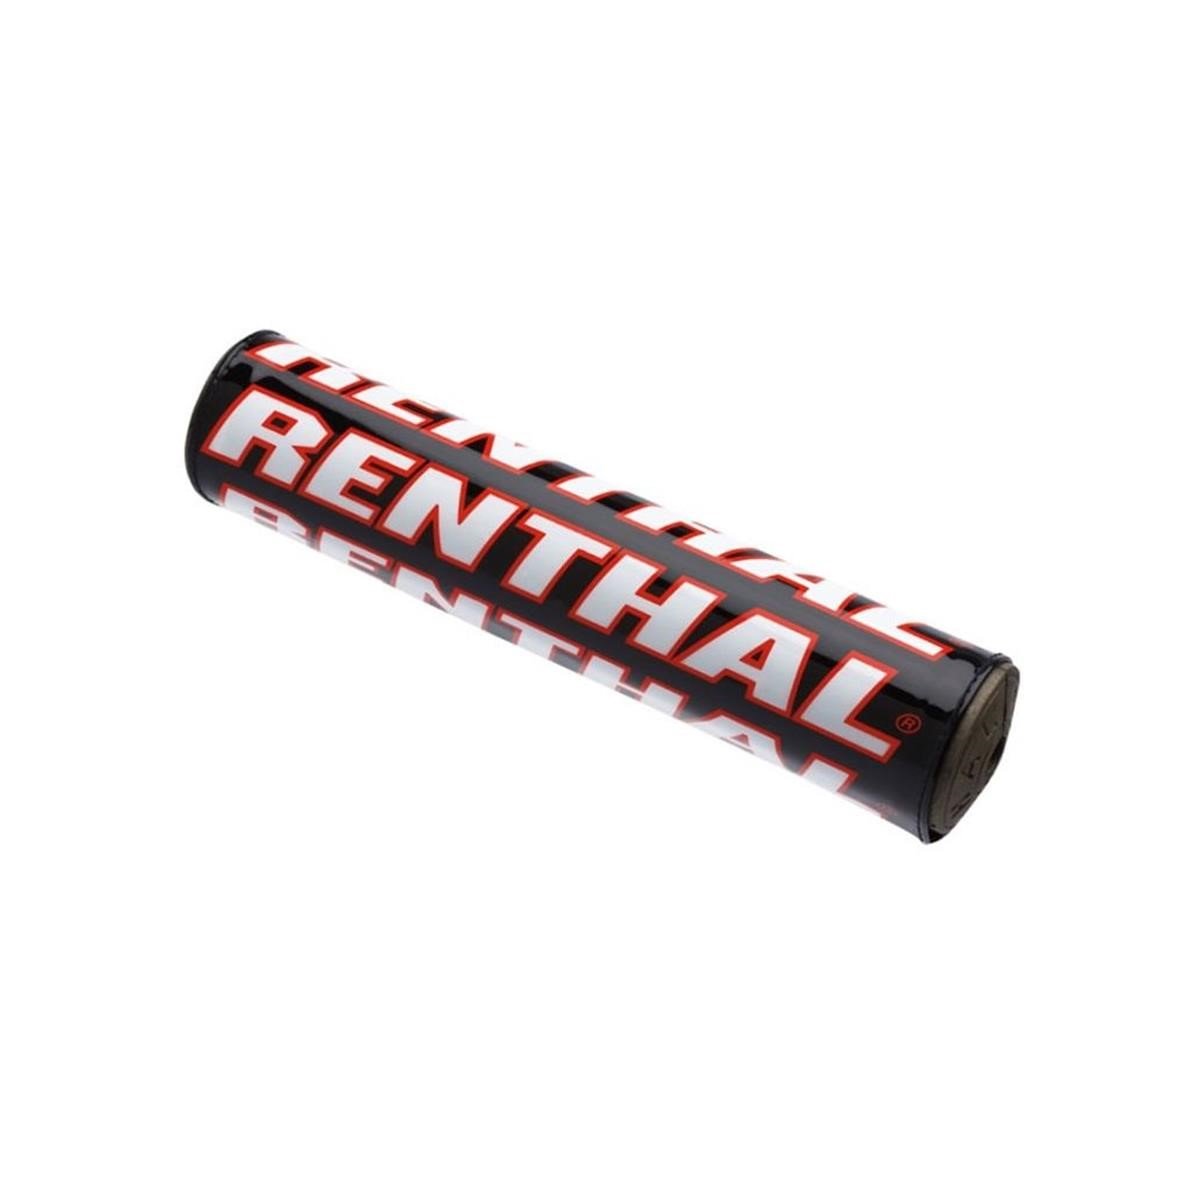 Renthal Bar Pad SX Black/Red